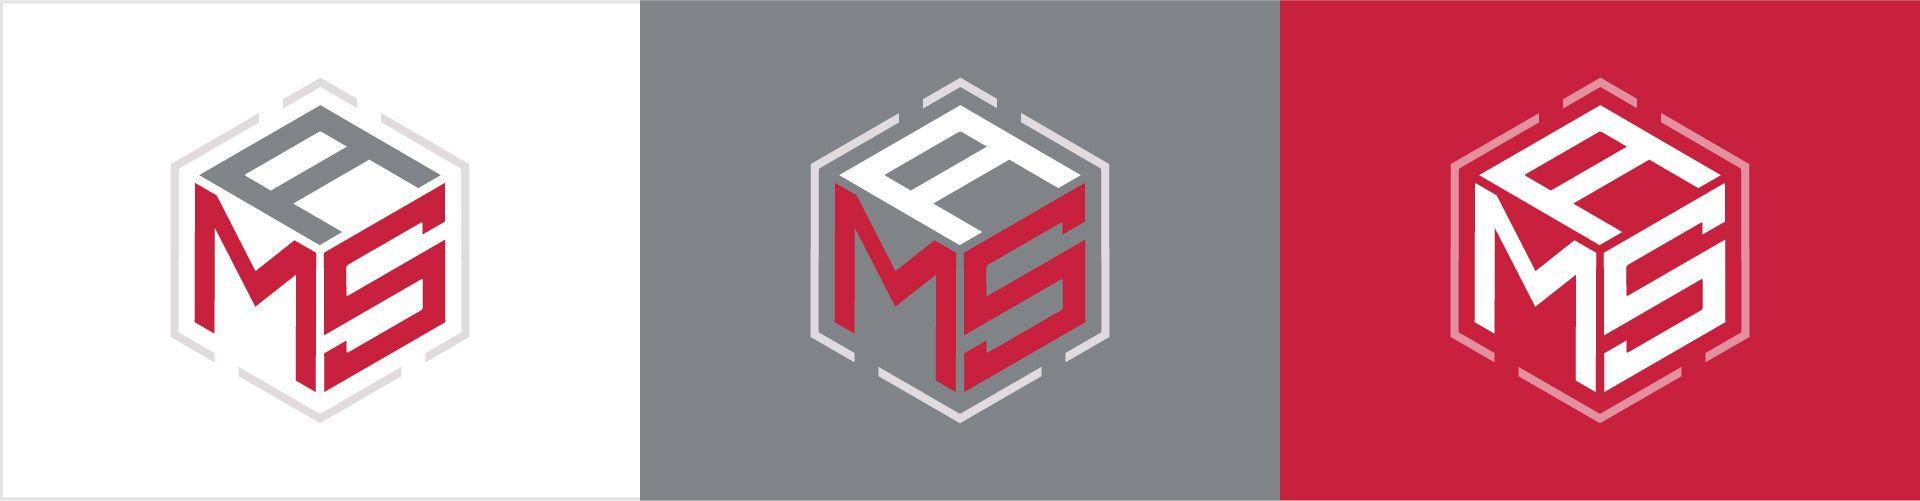 MSA Logo - Danimal Design - Dan Allan Logo Design